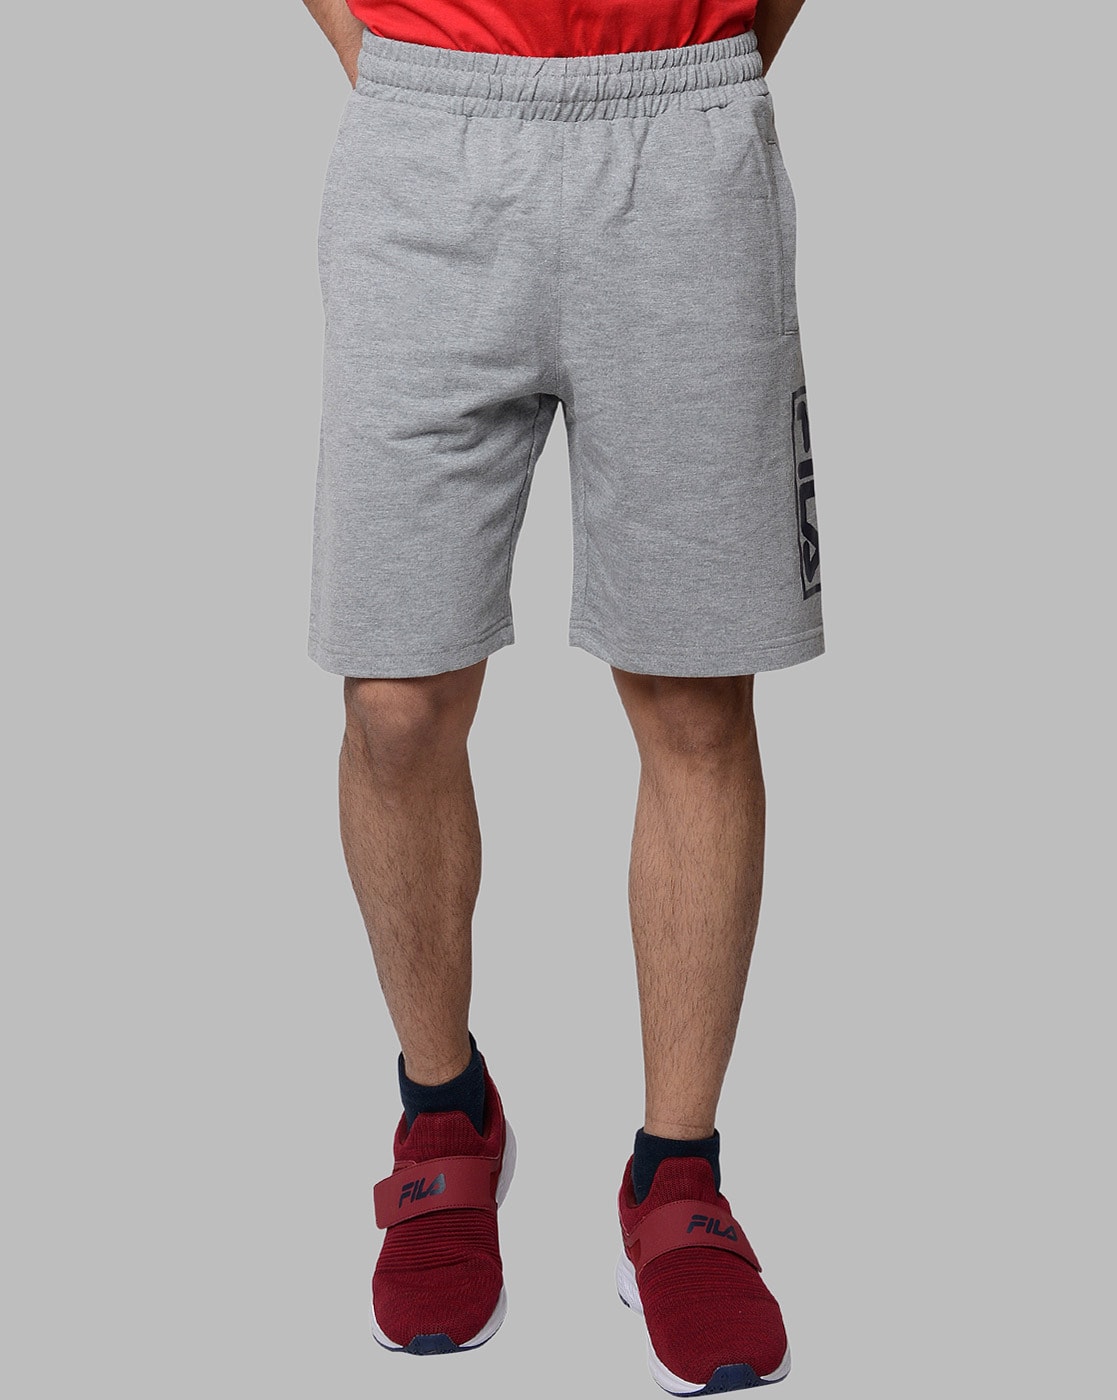 grey fila shorts